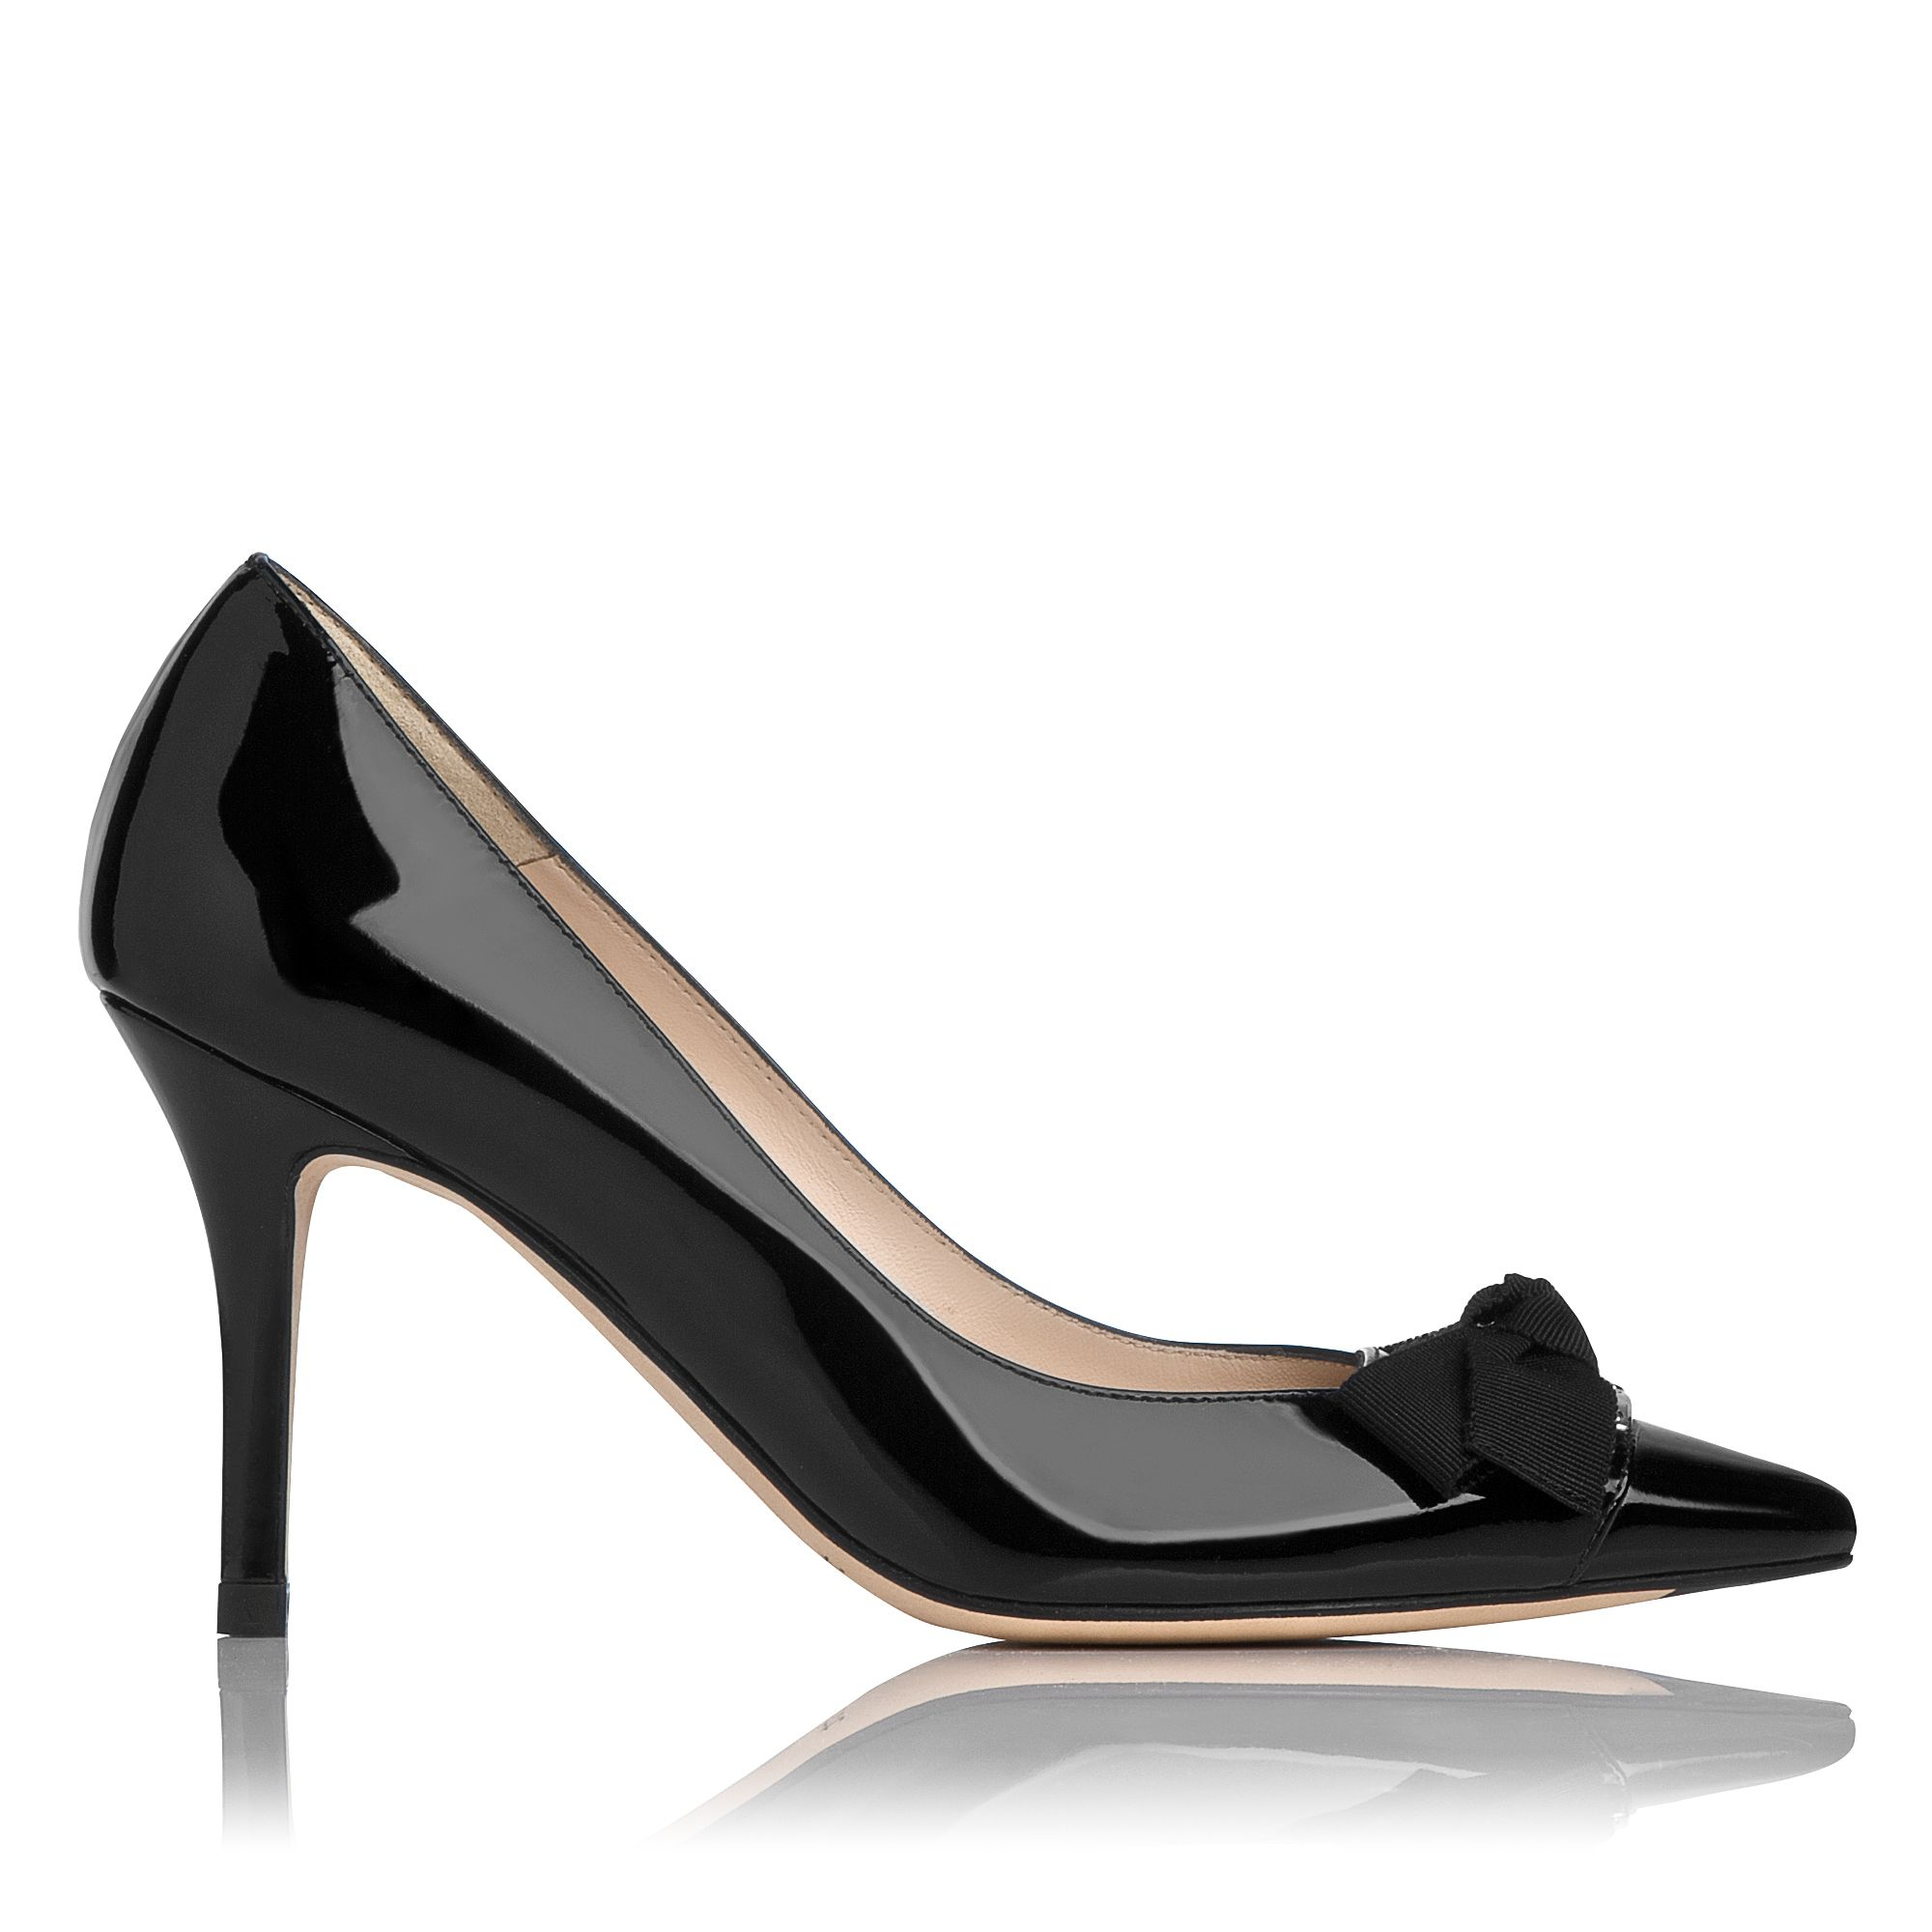 L.k.bennett Irene Patent Court Shoe in Black | Lyst2000 x 2000